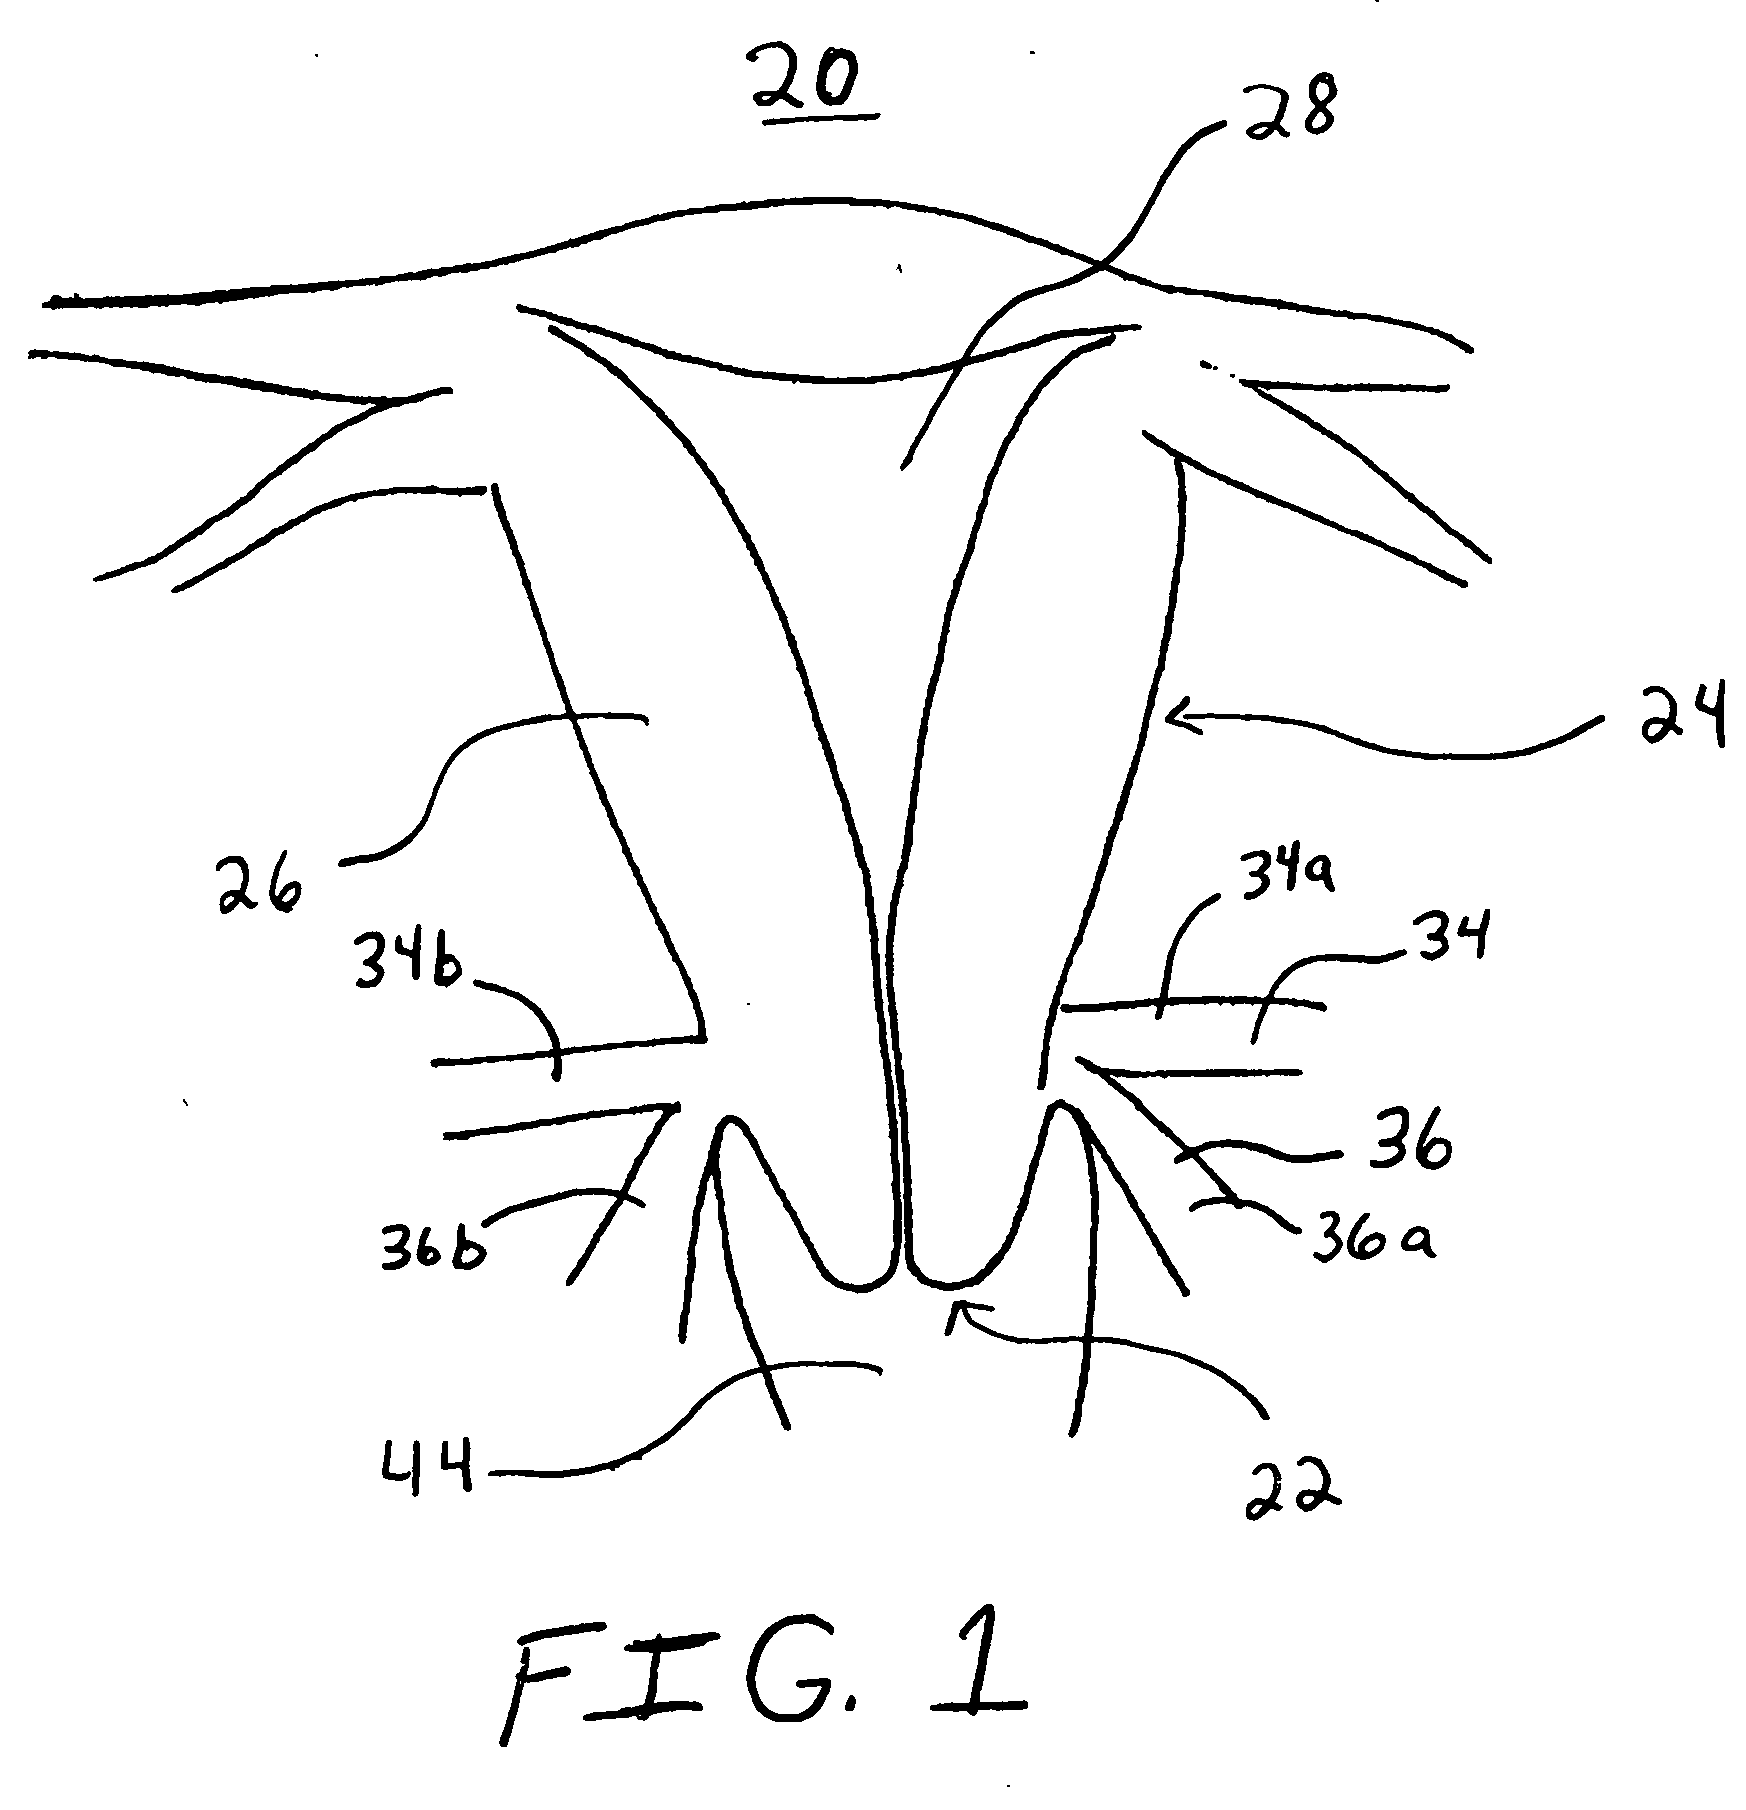 Transvaginal uterine artery occlusion for treatment of uterine leiomyomas